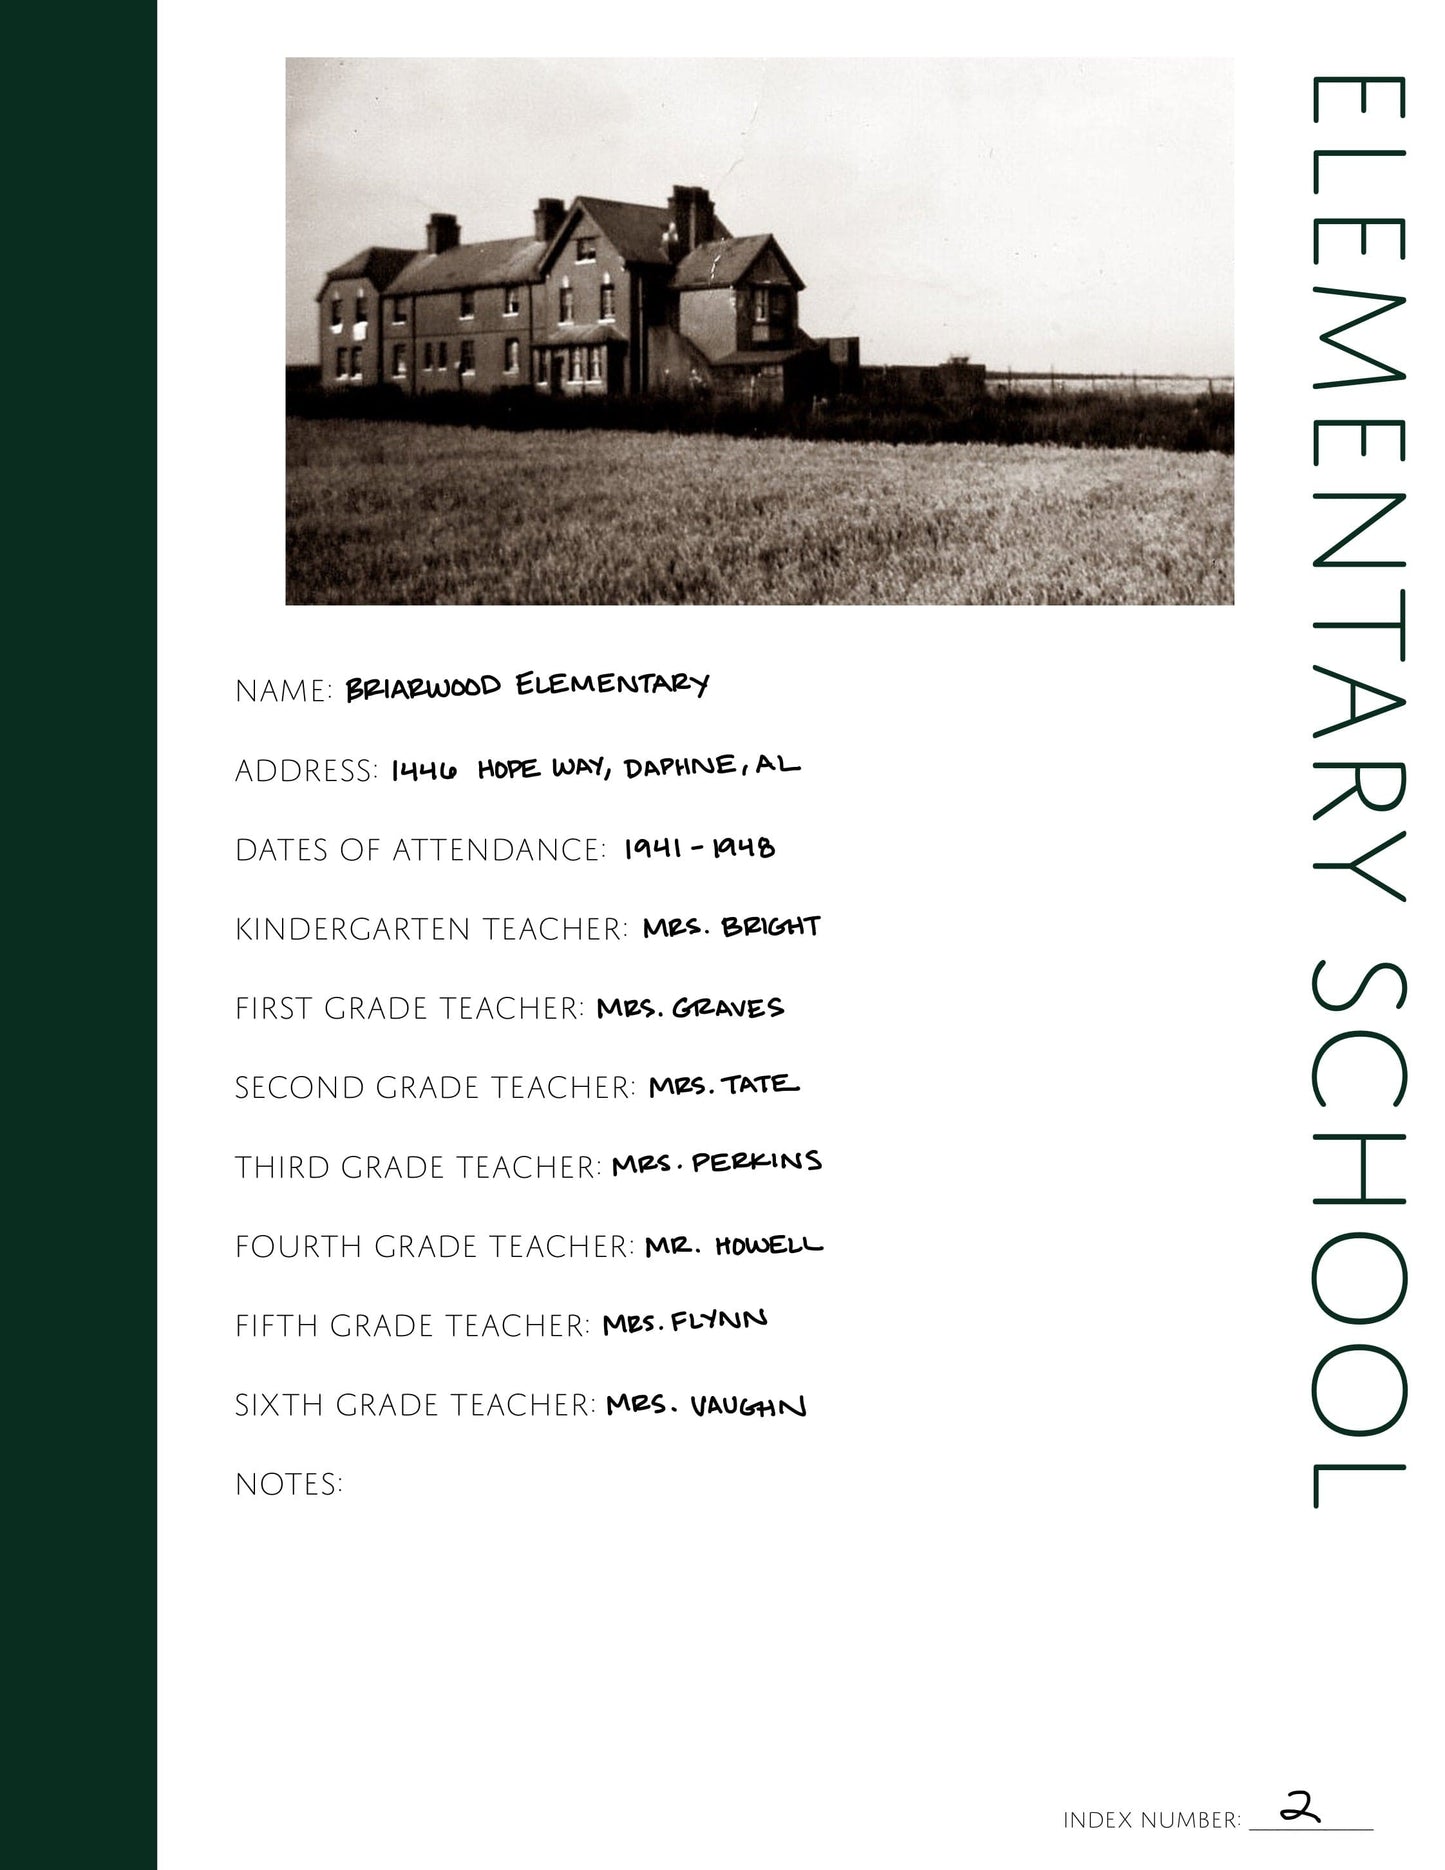 Elementary School Profile: Printable Genealogy Page (Digital Download)